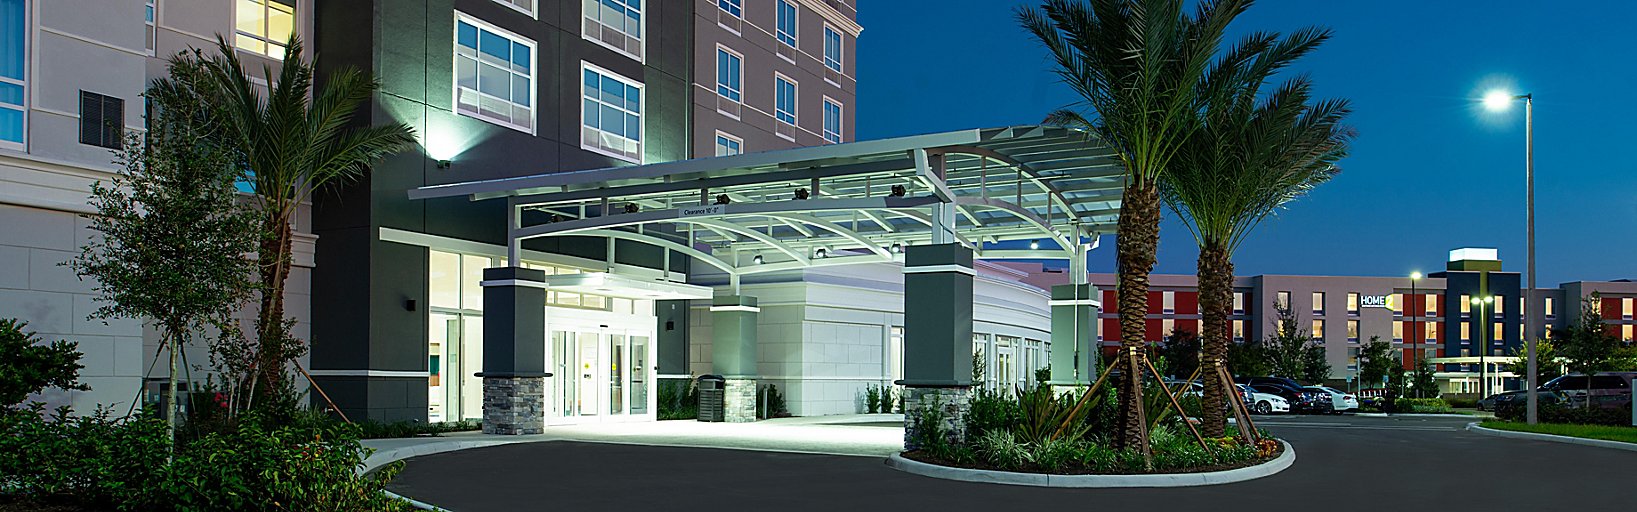 International Drive Orlando Hotels Holiday Inn Suites